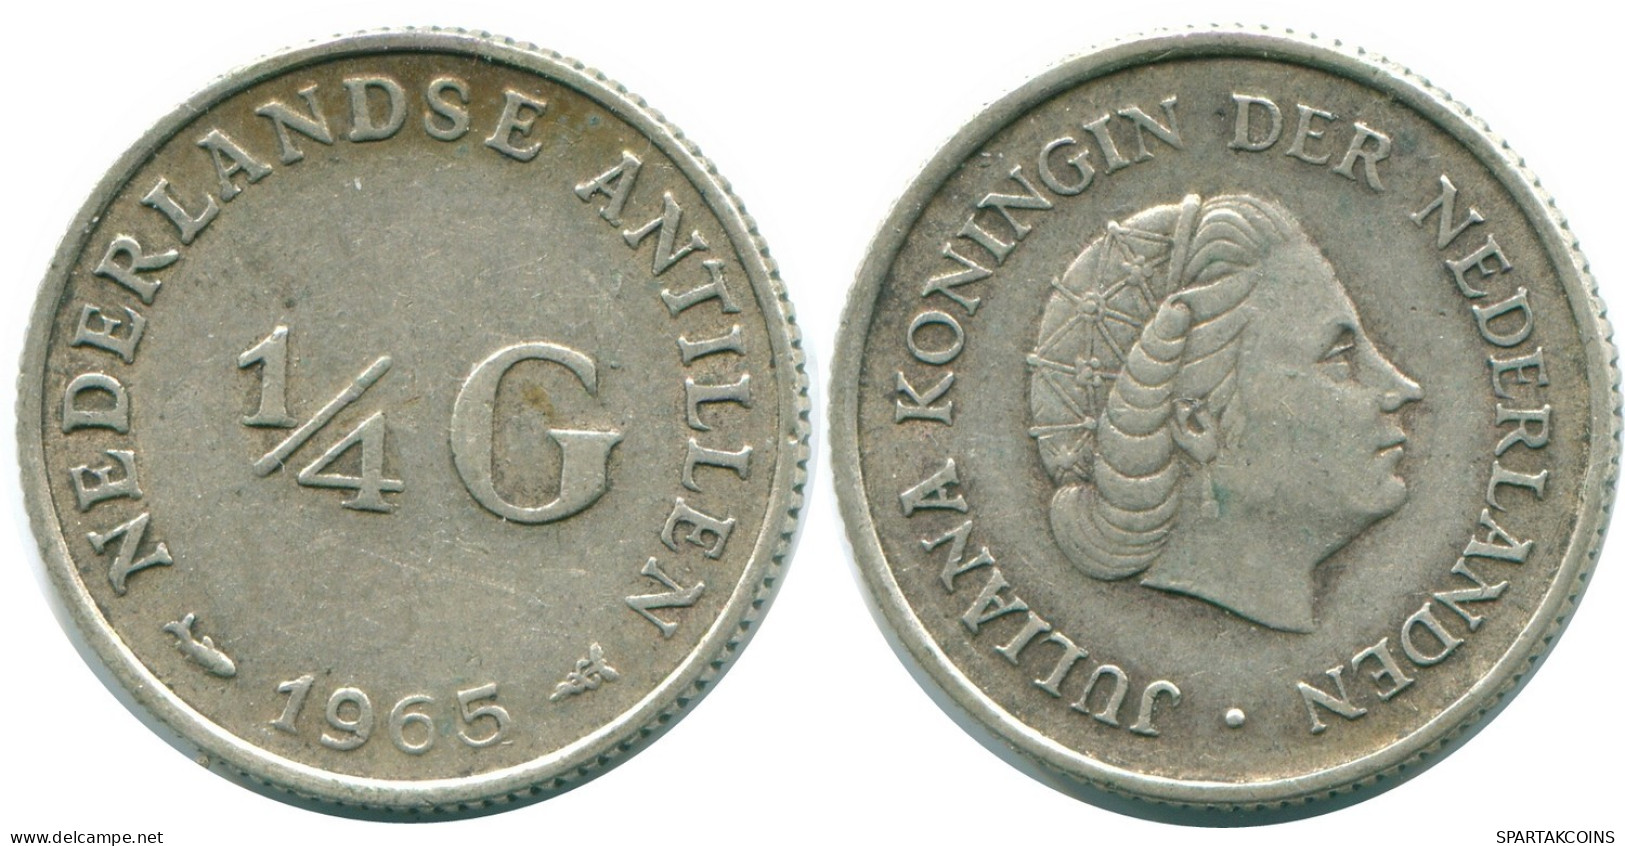 1/4 GULDEN 1965 NETHERLANDS ANTILLES SILVER Colonial Coin #NL11425.4.U.A - Netherlands Antilles